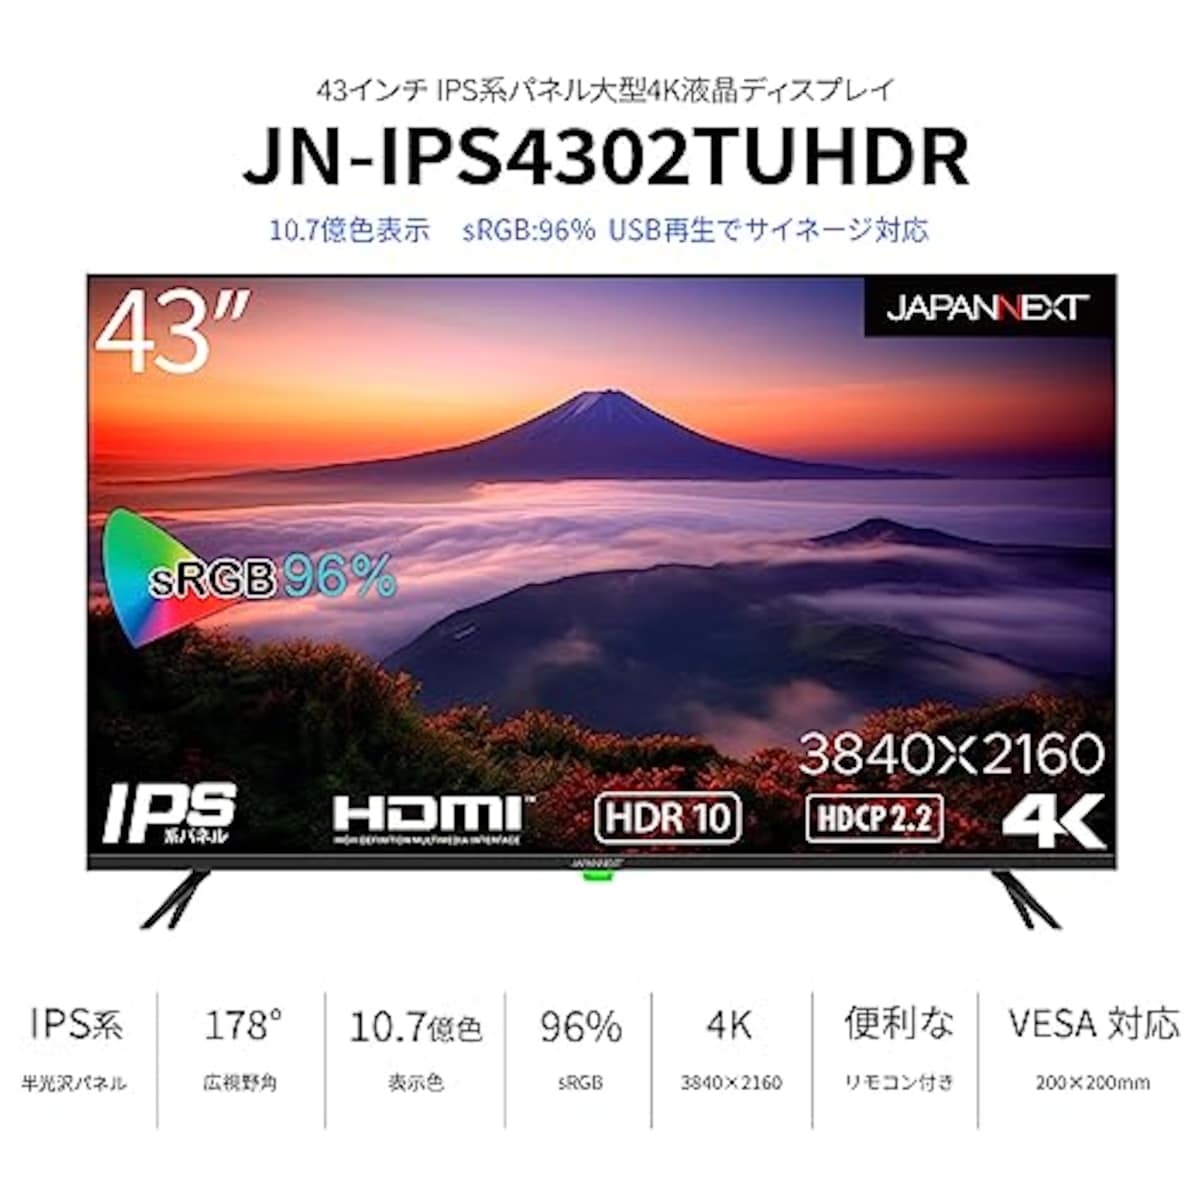  JAPANNEXT 43インチ 大型4K(3840x2160)液晶ディスプレイ JN-IPS4302TUHDR HDR対応 HDMI USB再生対応 サイネージ画像3 